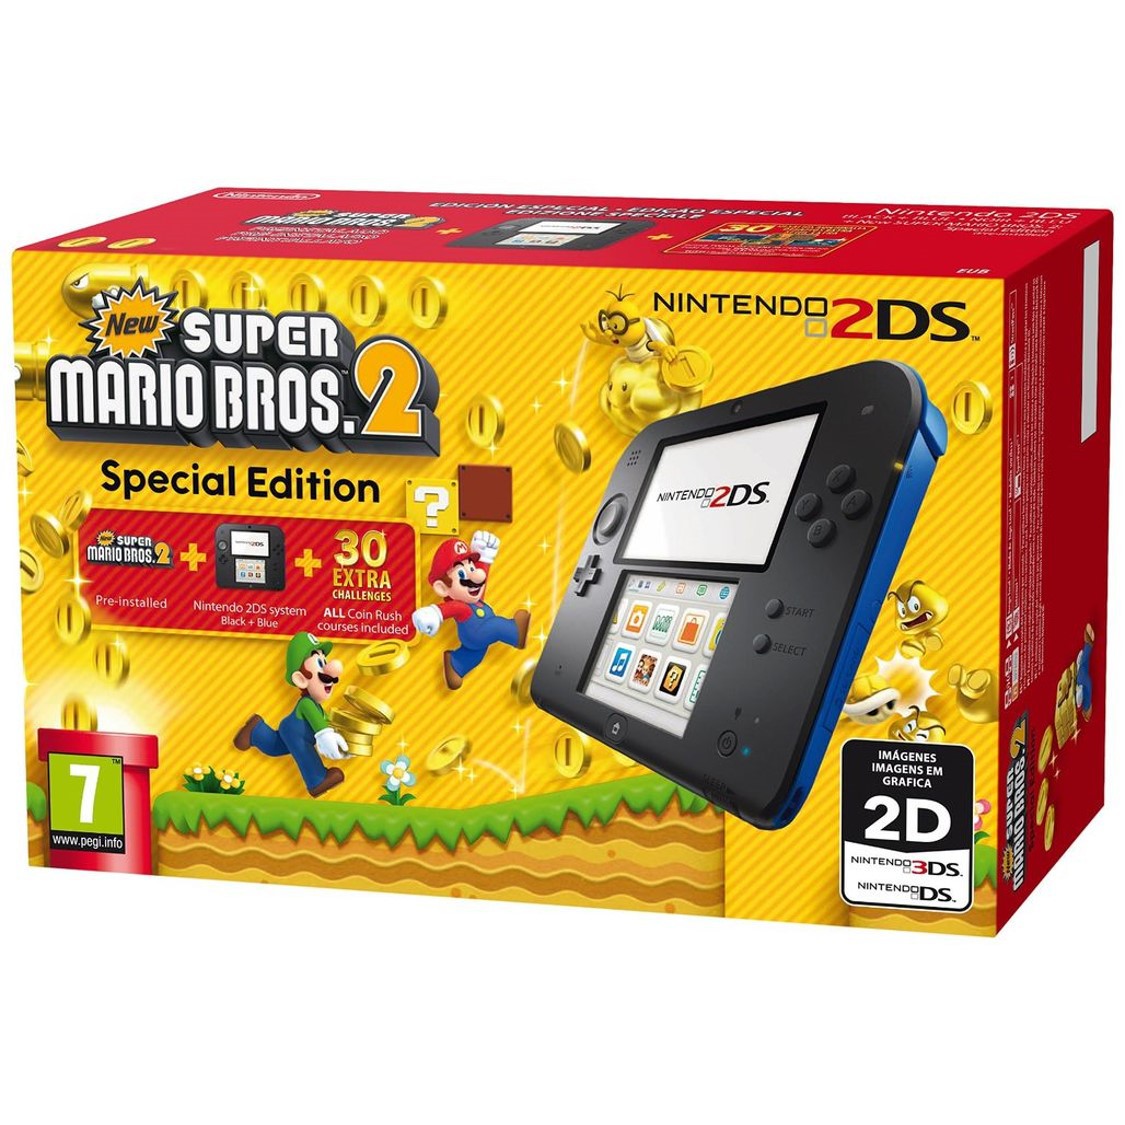 Nintendo 2DS - Black/Blue (Electric Blue) - Super Mario Bros 2 Edition [Complete] - Nintendo 3DS Hardware